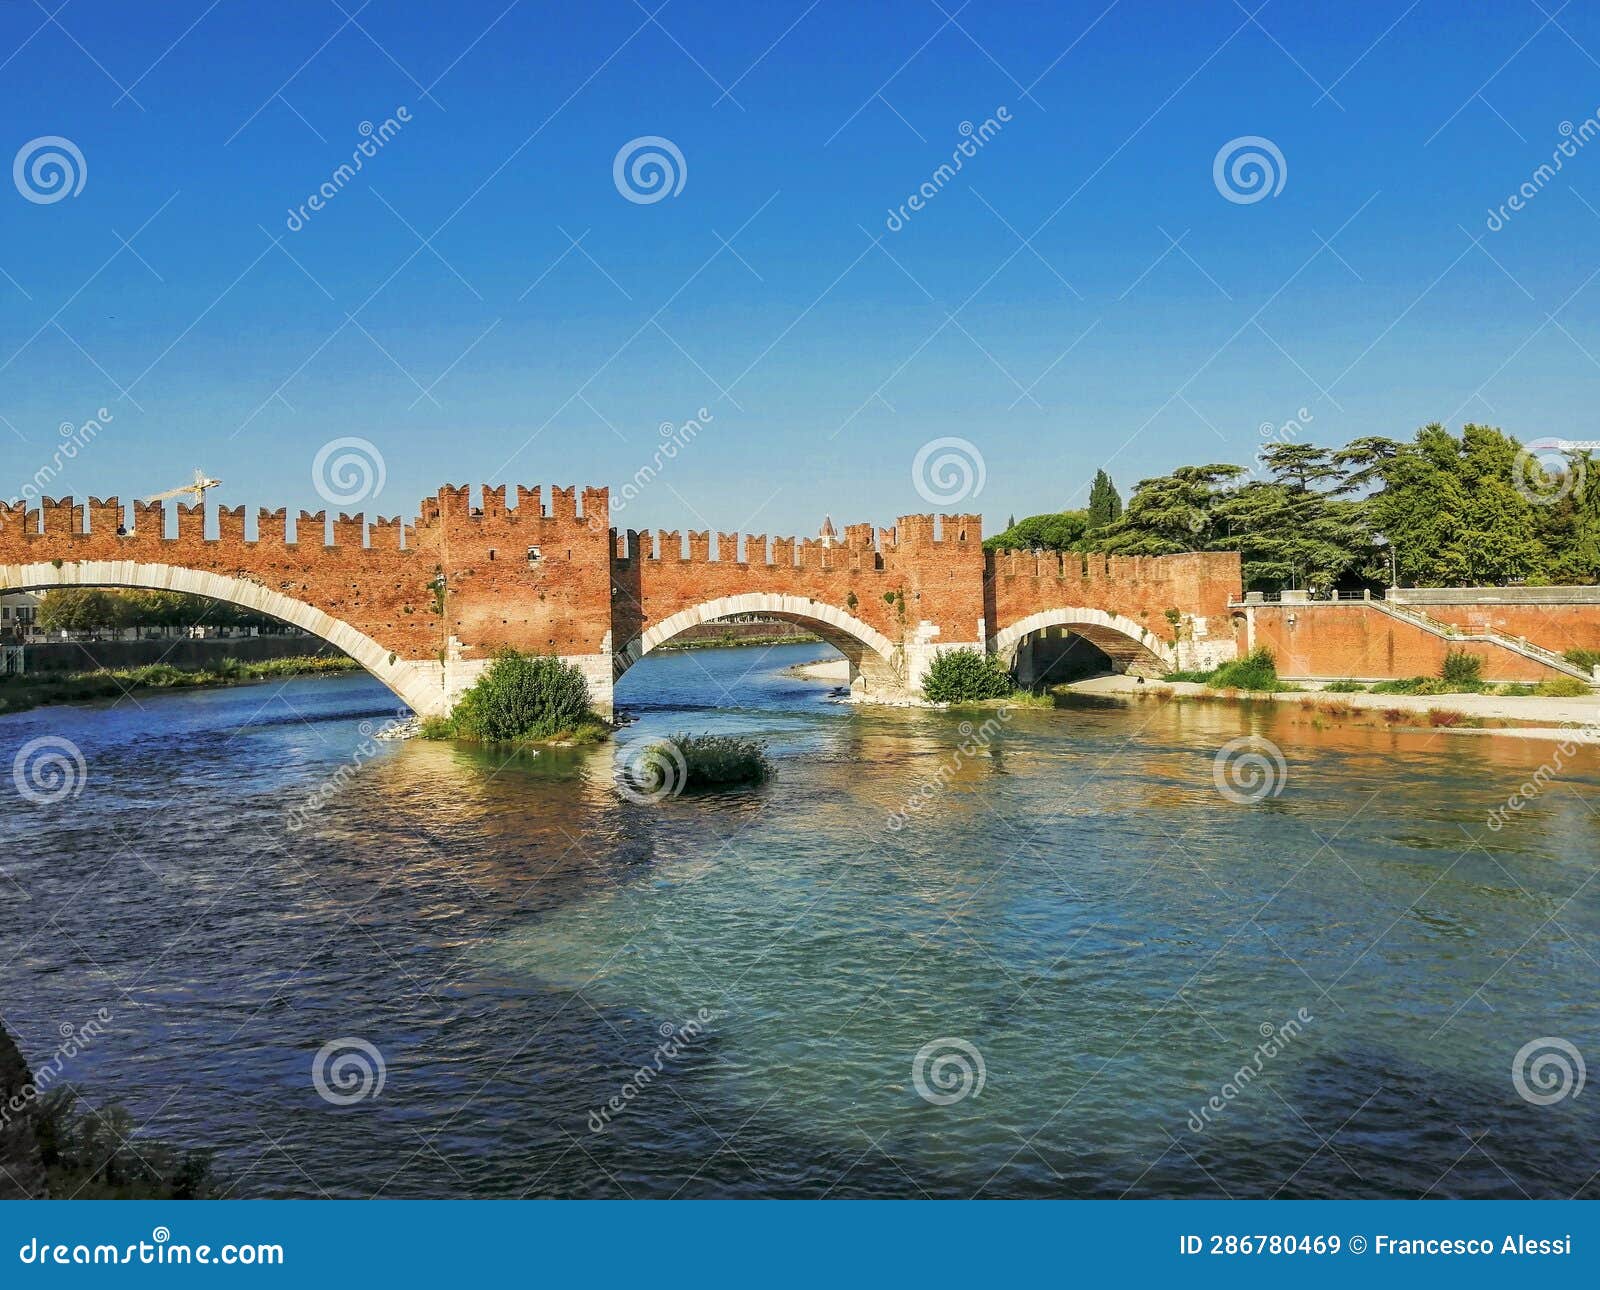 stone bridge of ponte scaligero, verona